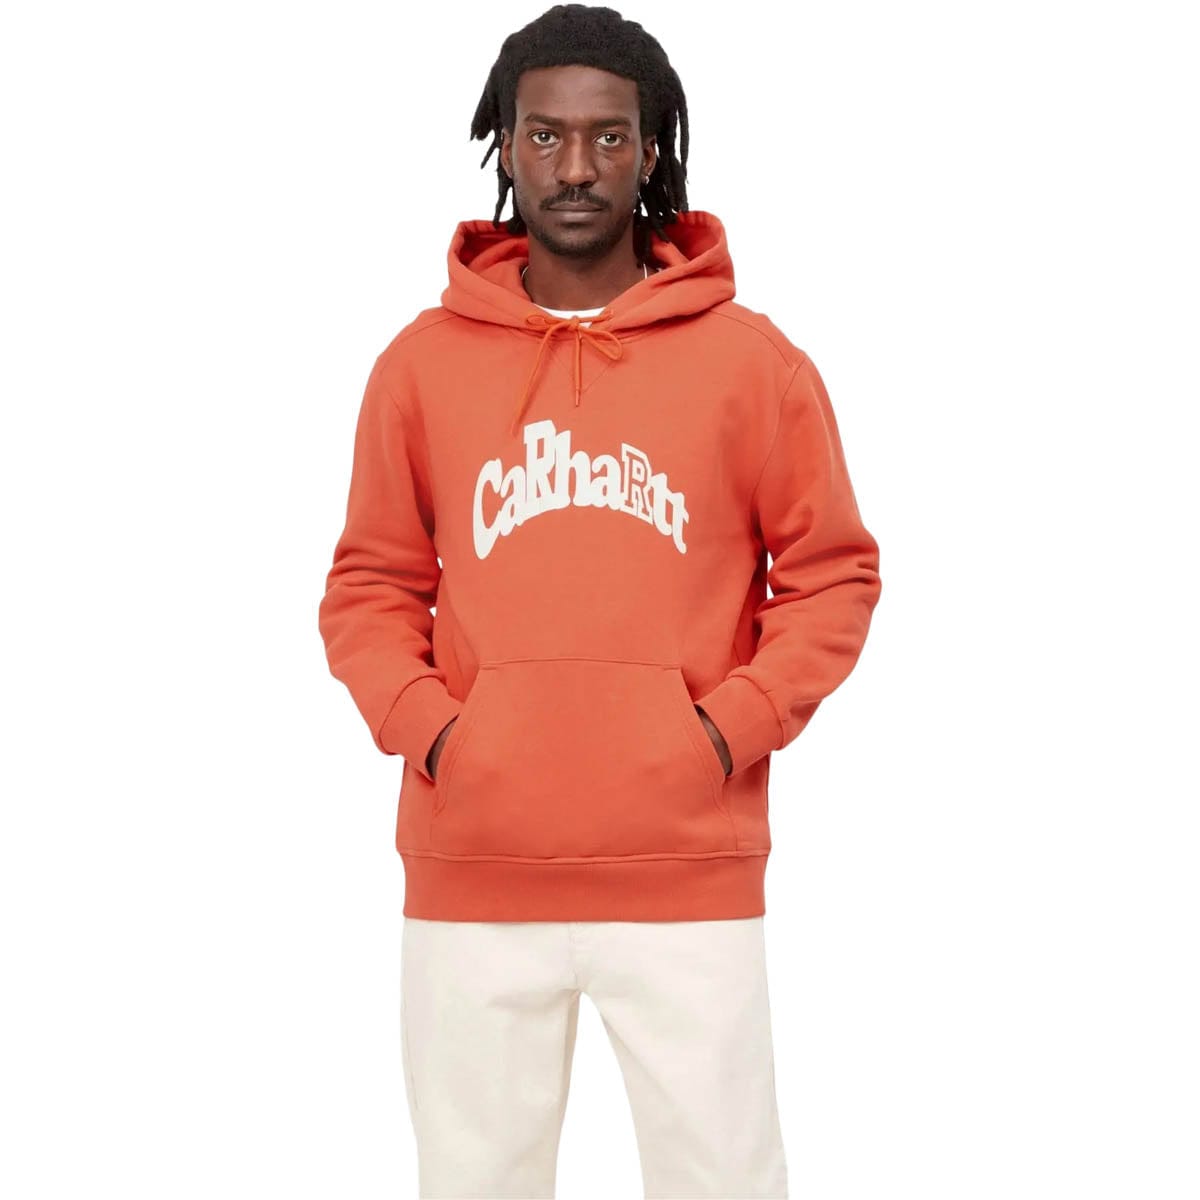 Carhartt WIP Hoodies & Sweatshirts HOODED AMHERST SWEAT